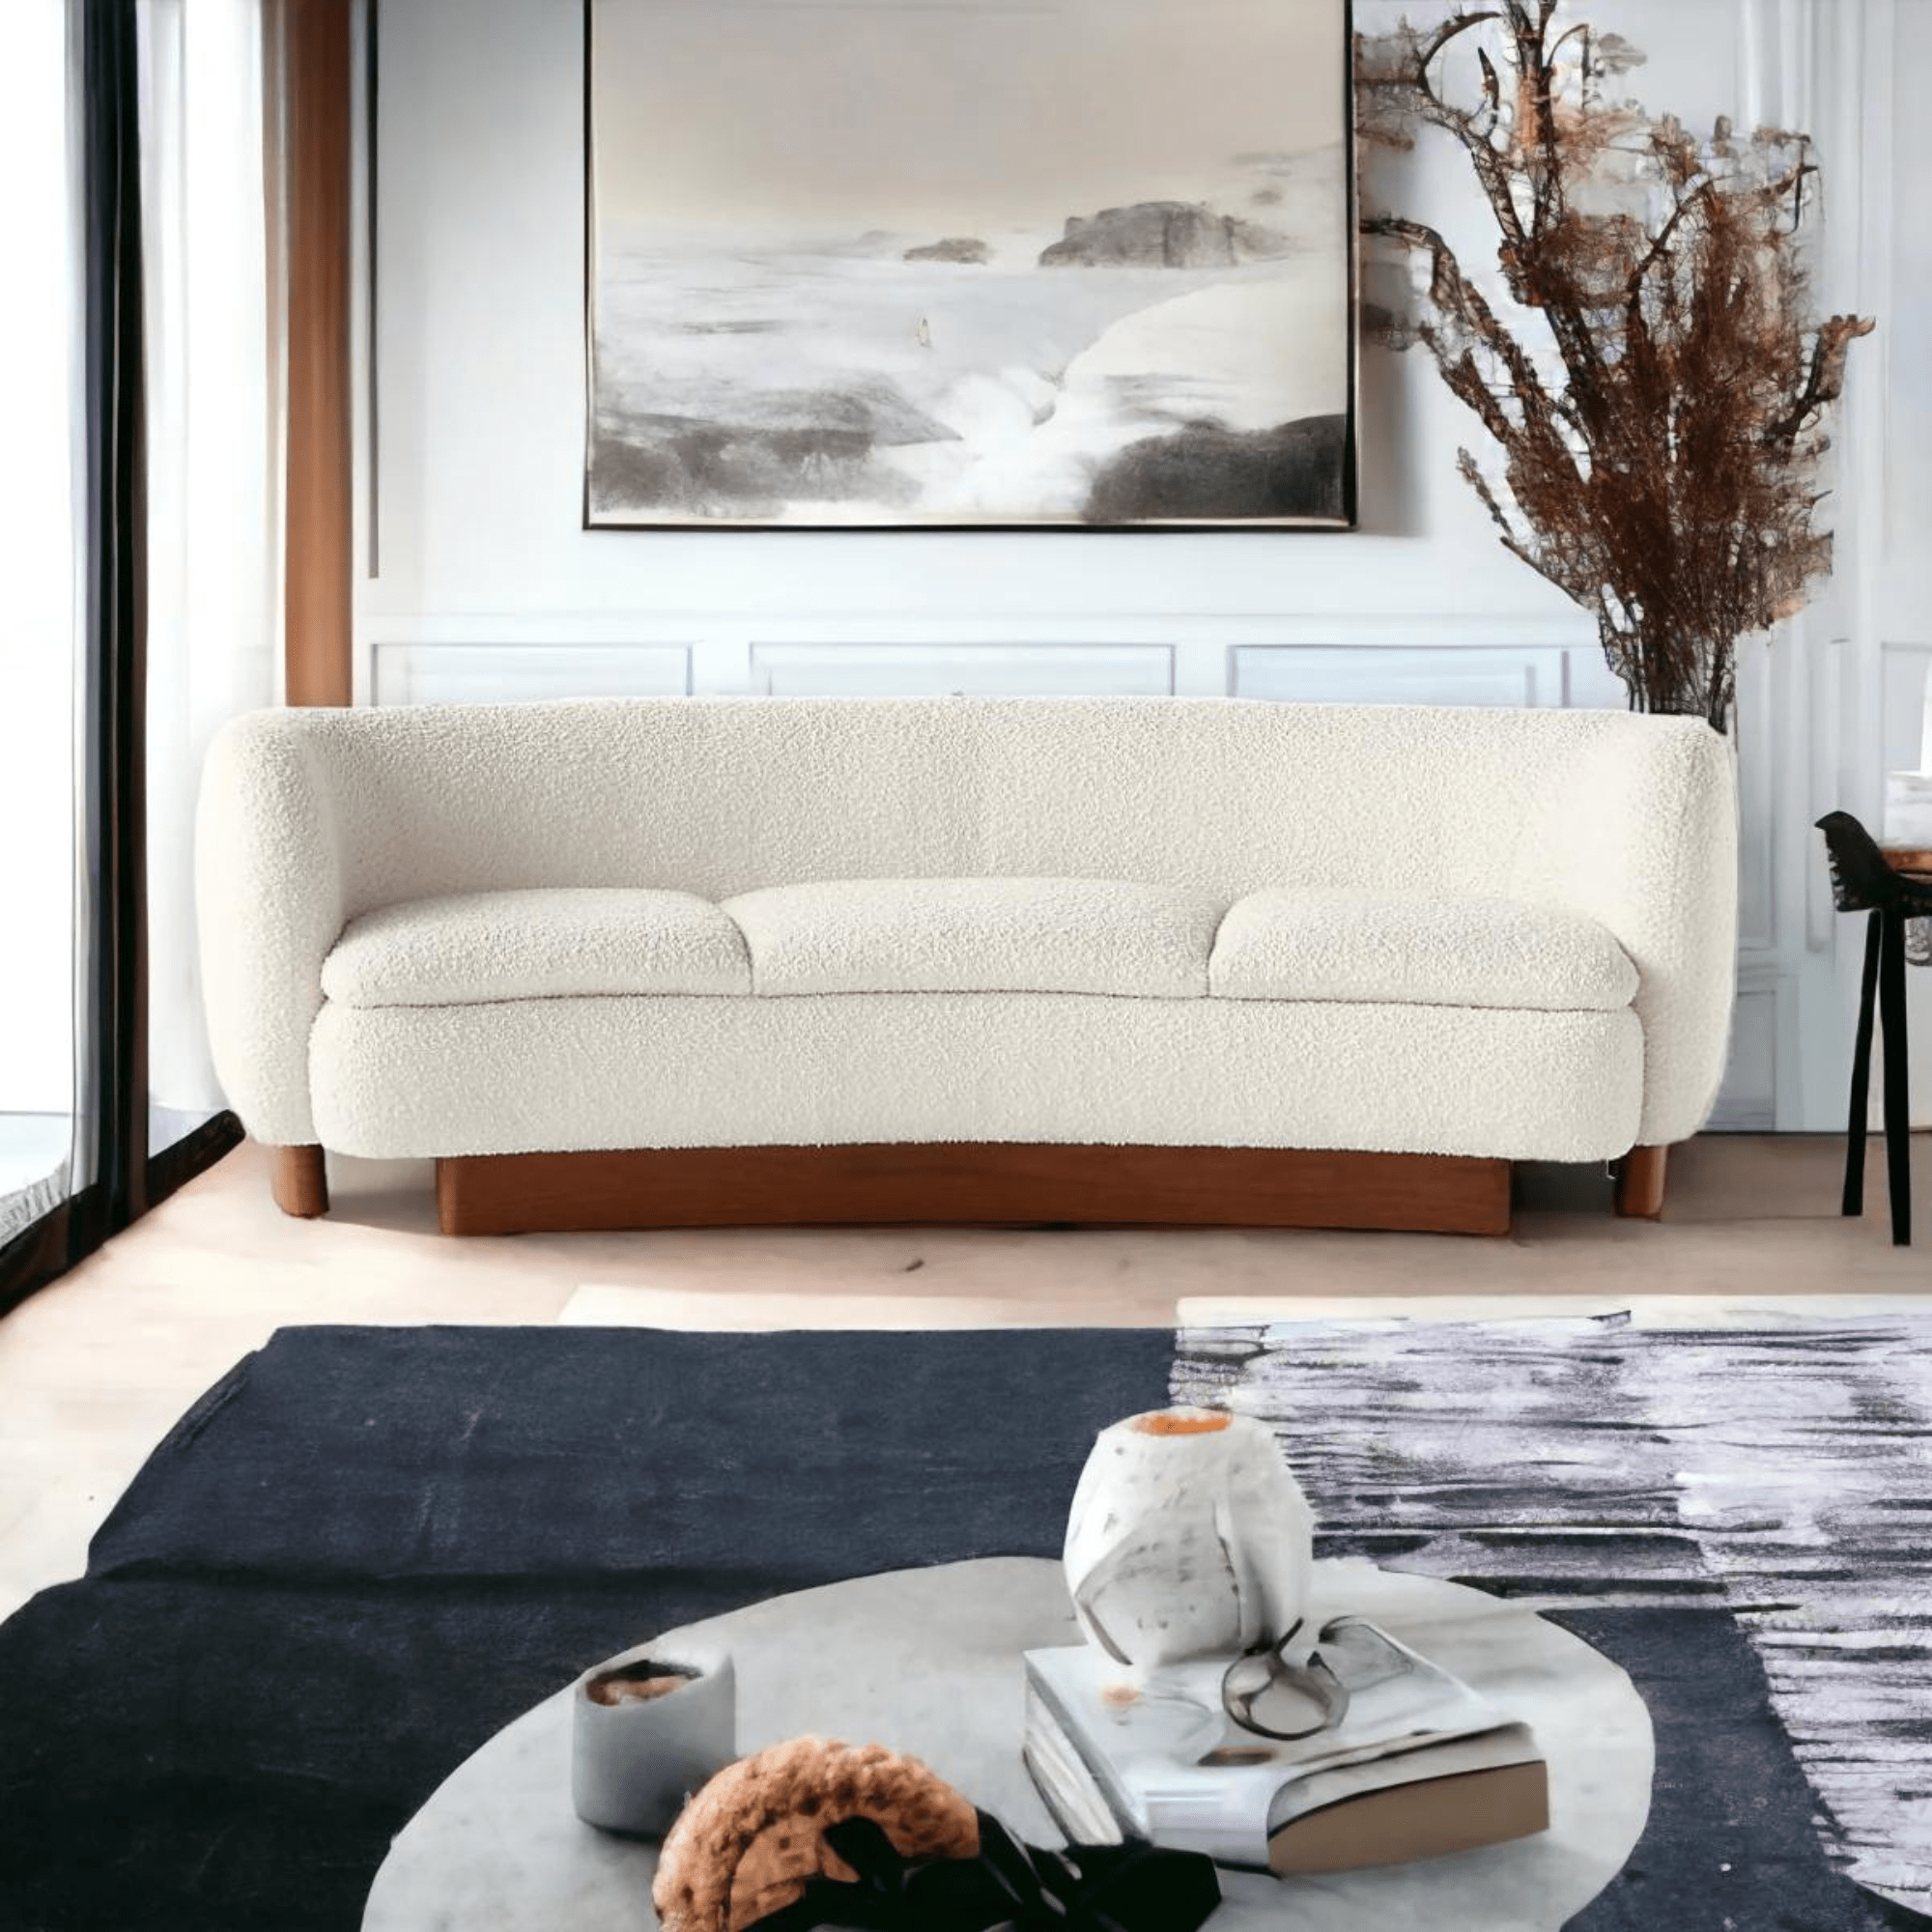 3 Seater Wooden Sofa Set Online